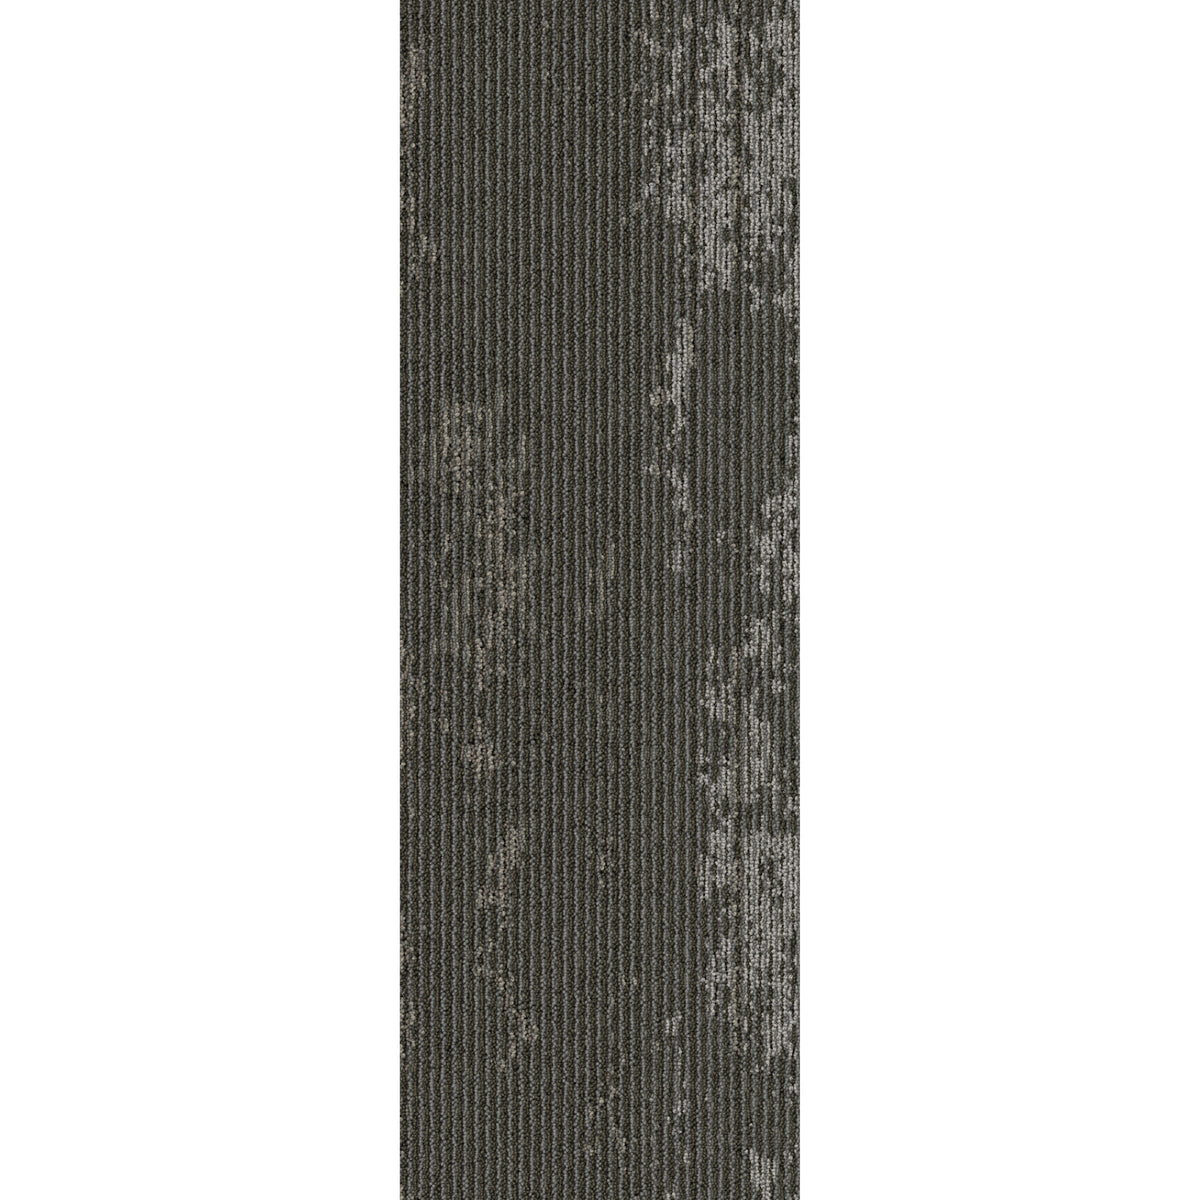 Mohawk Group - Iconic Earth - Metalmorphic - Carpet Tile - Classic Ridge Metall